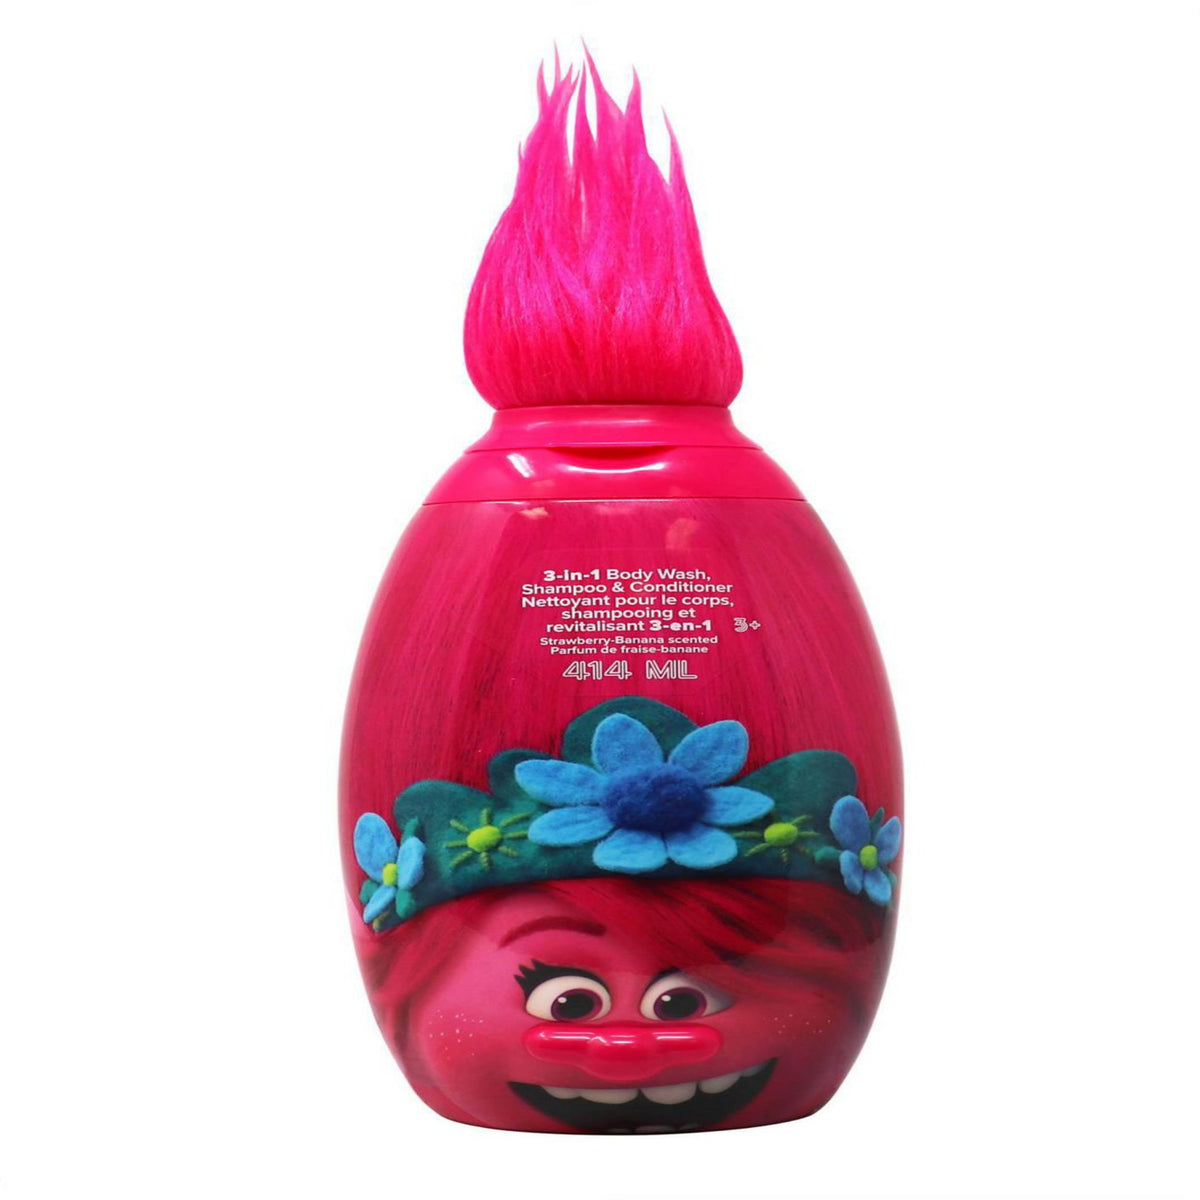 DreamWorks Trolls Kids Gift Set Body Spray & Shower Gel by Air Val